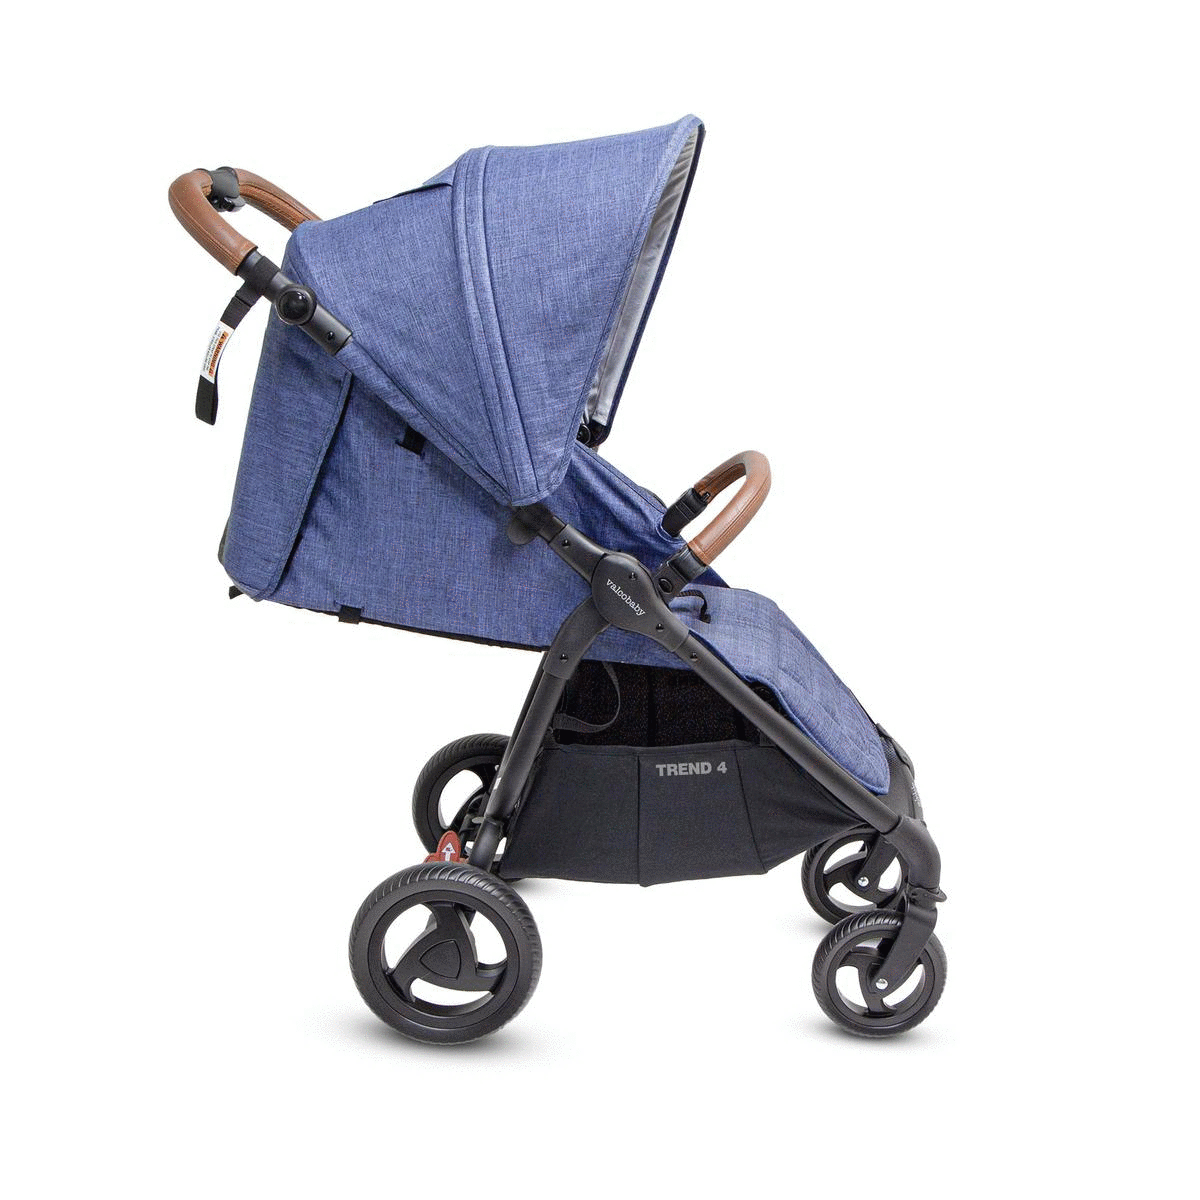 Valco baby Snap 4 Trend Lightweight Stroller 2020 (Denim)